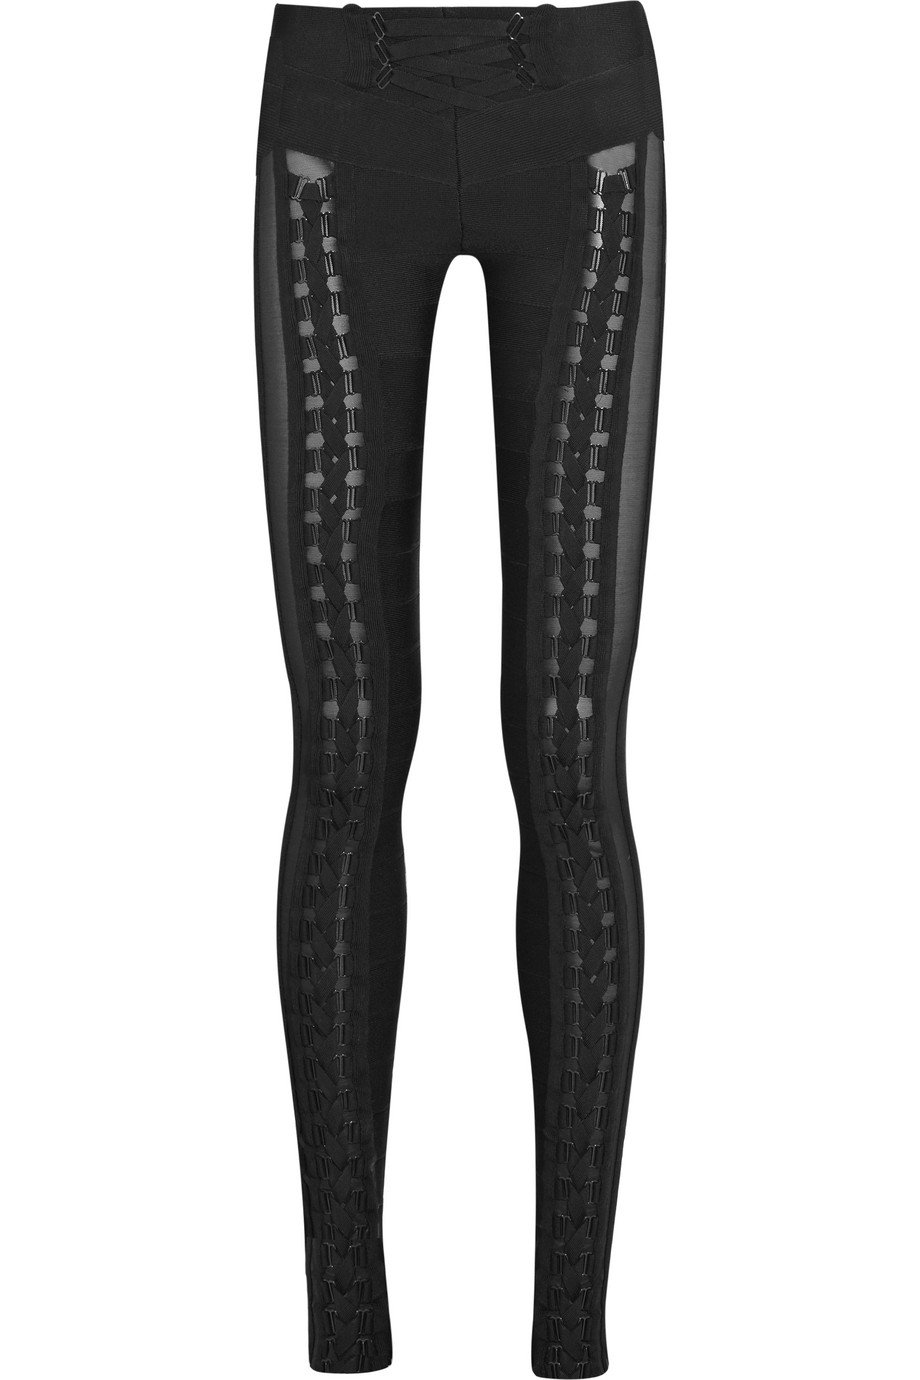 Lyst - Hervé léger Lace-up Bandage Skinny Pants in Black